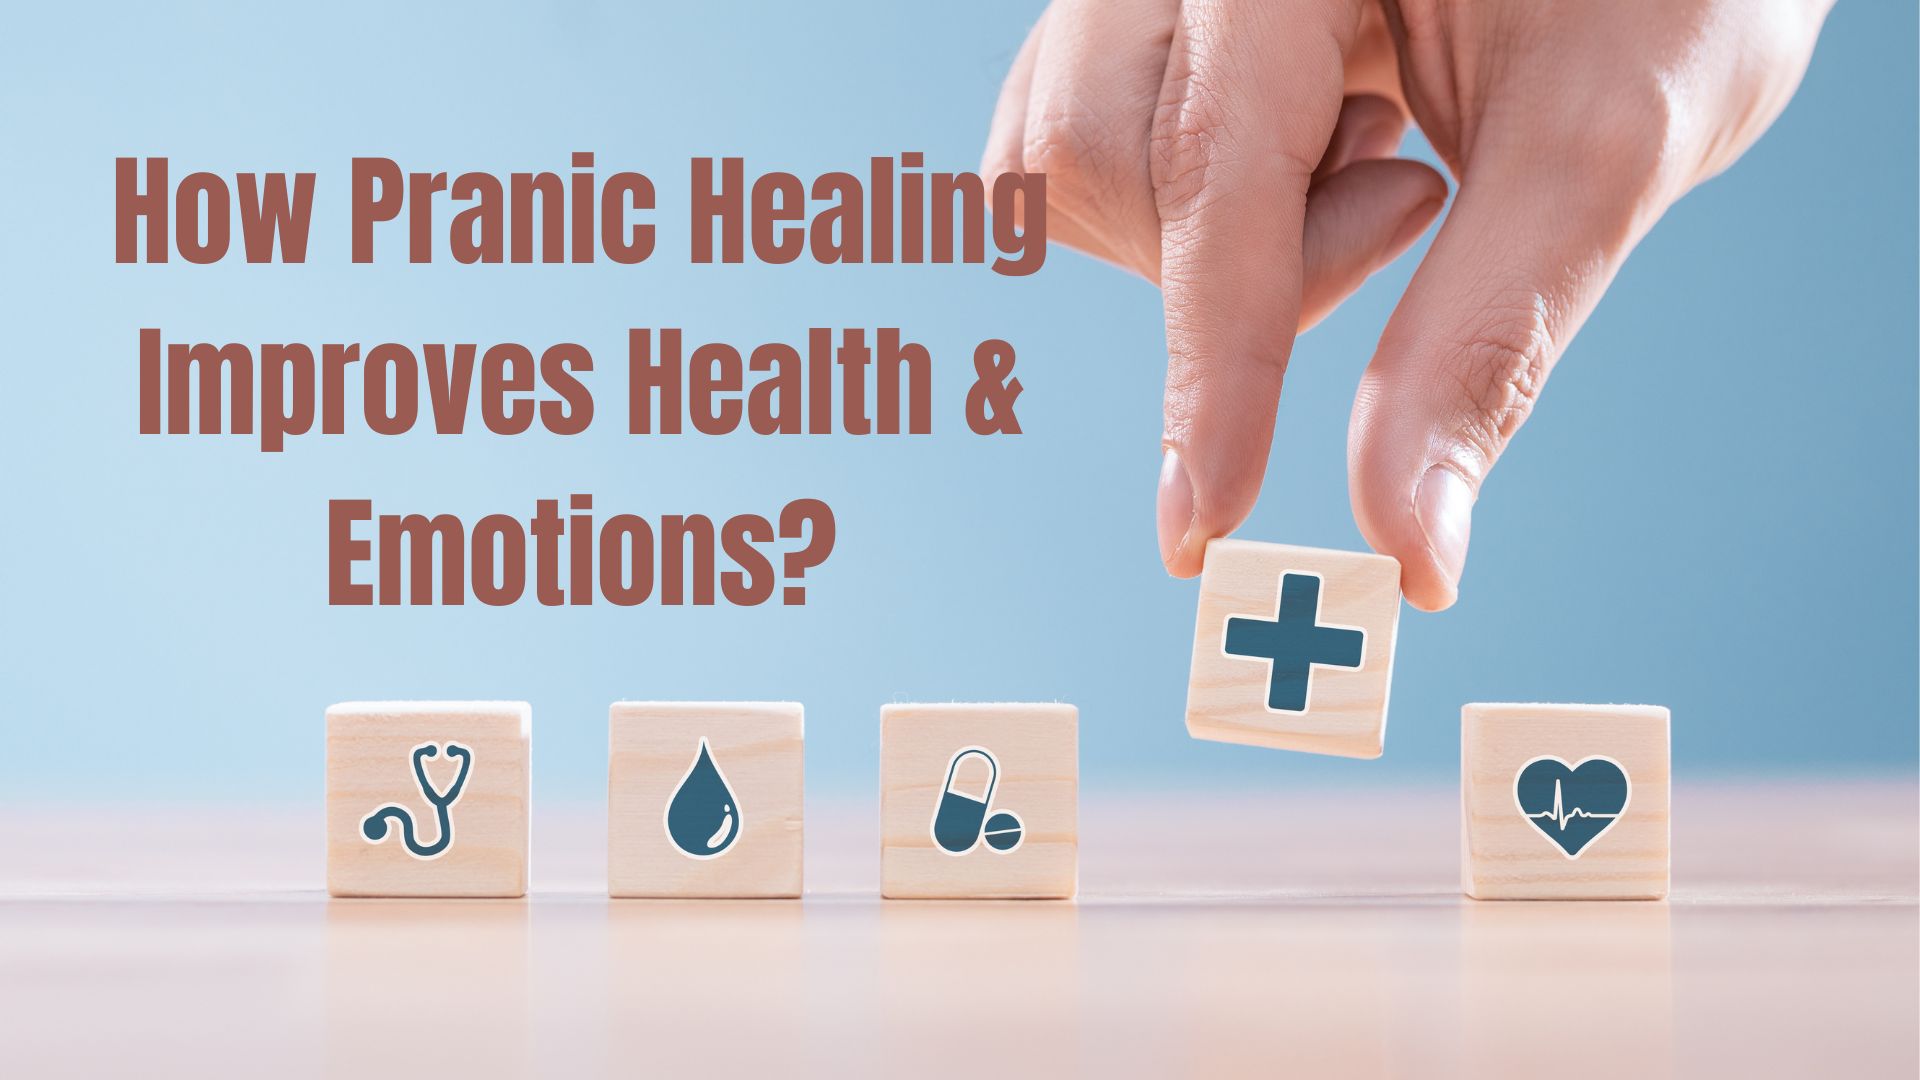 How Pranic Healing Improves Health & Emotions